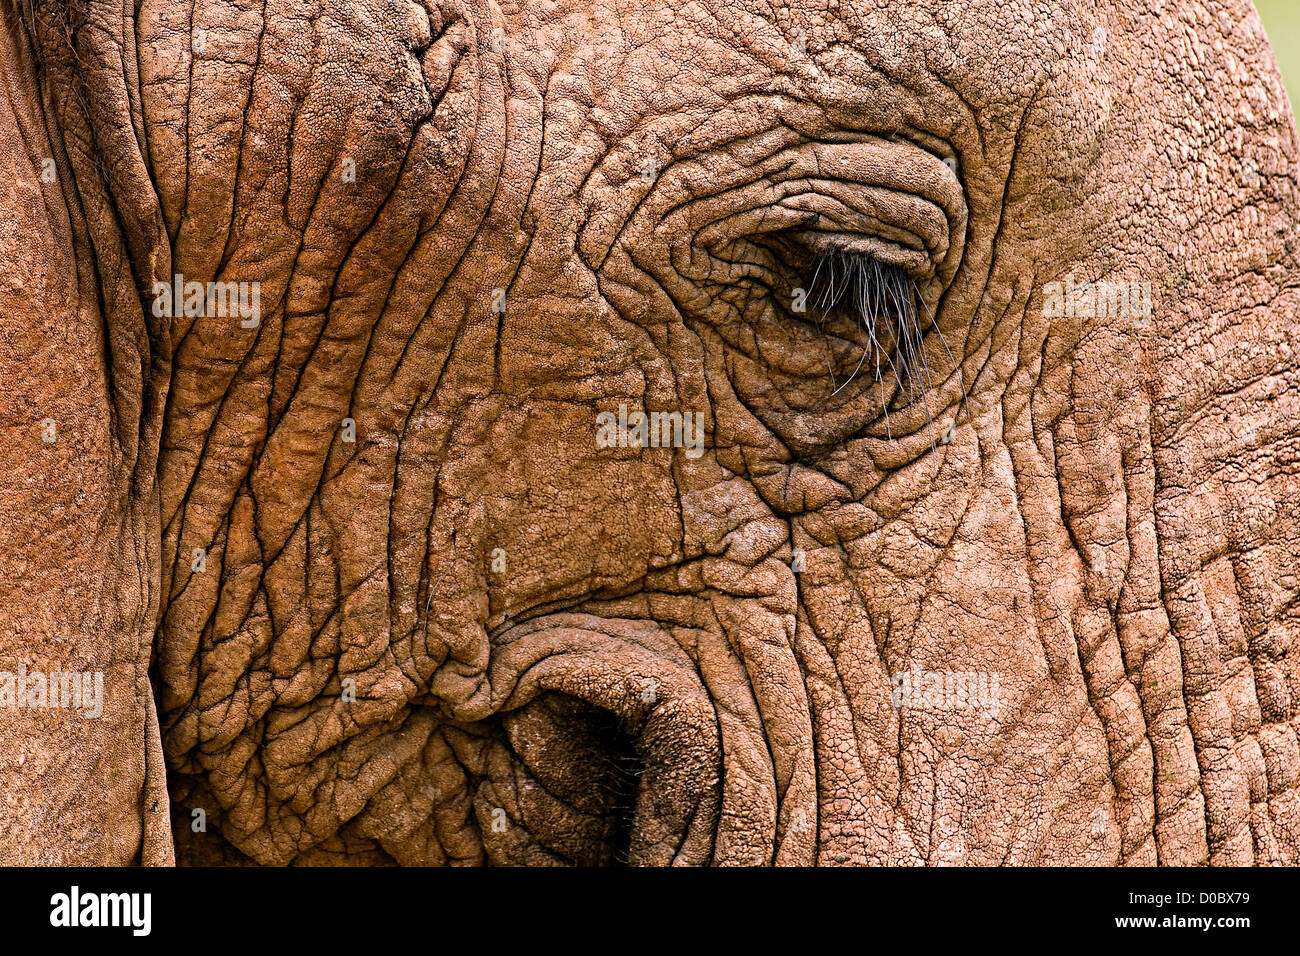 Leathery Skin an African Elephant Stock Photo - Alamy